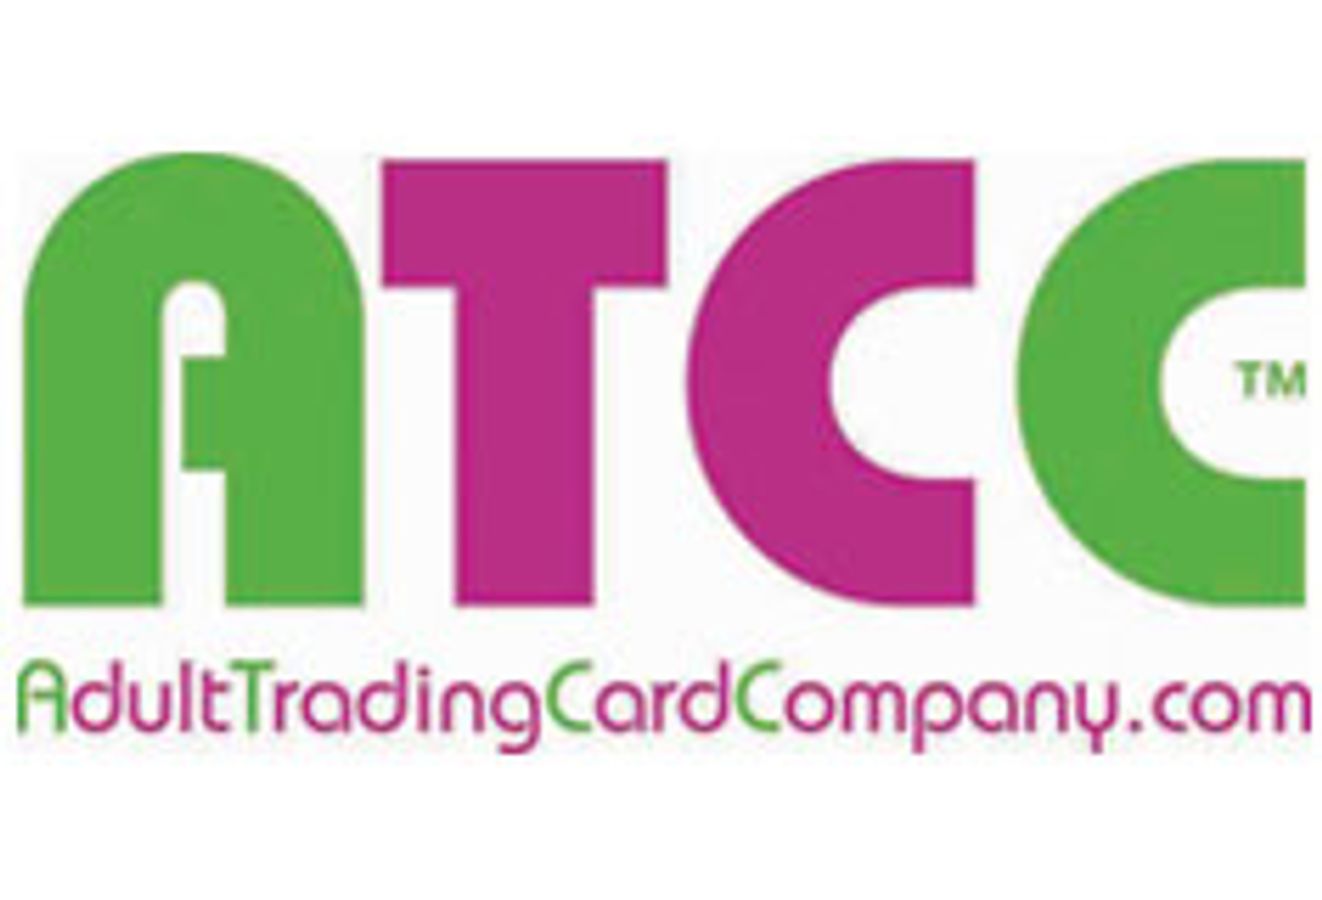 Adult Trading Card Company